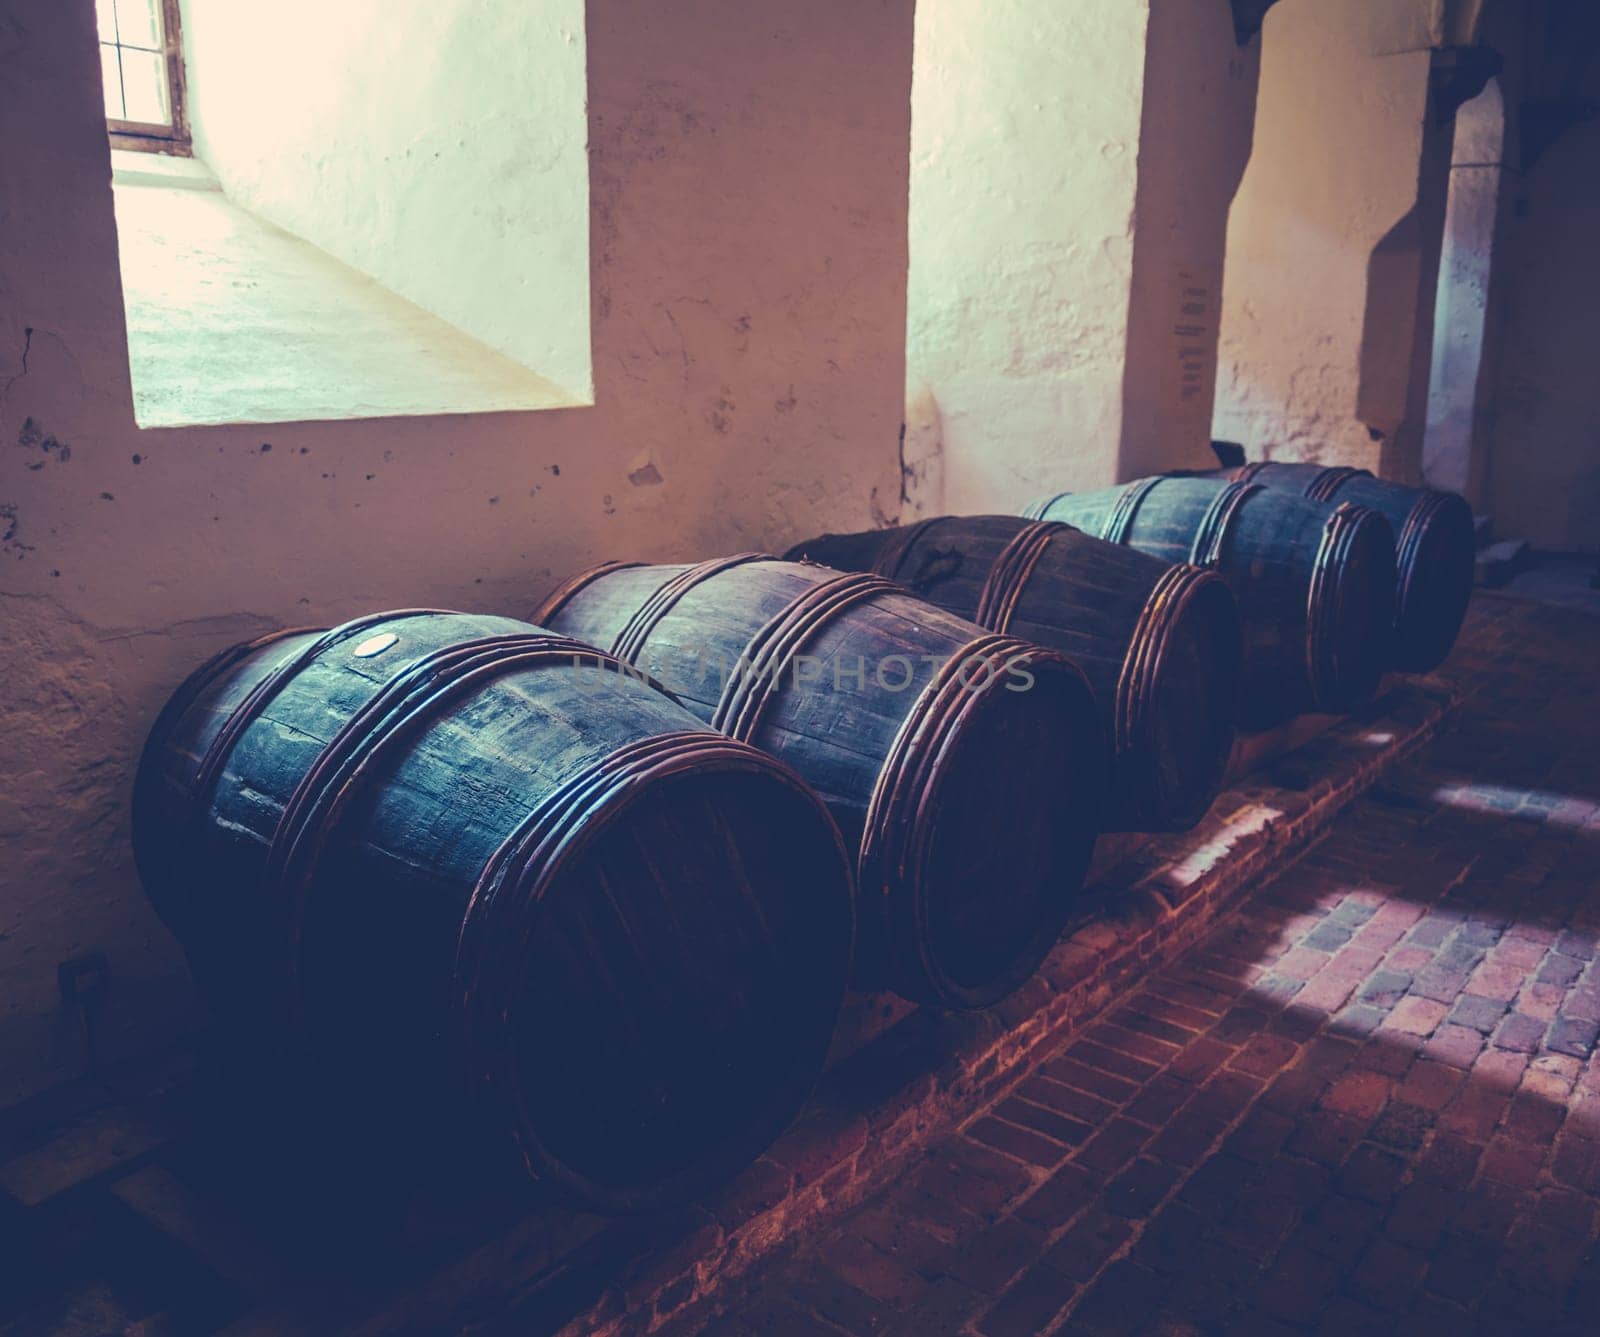 Barrels Of Wine Aging In A Rustic Cellar